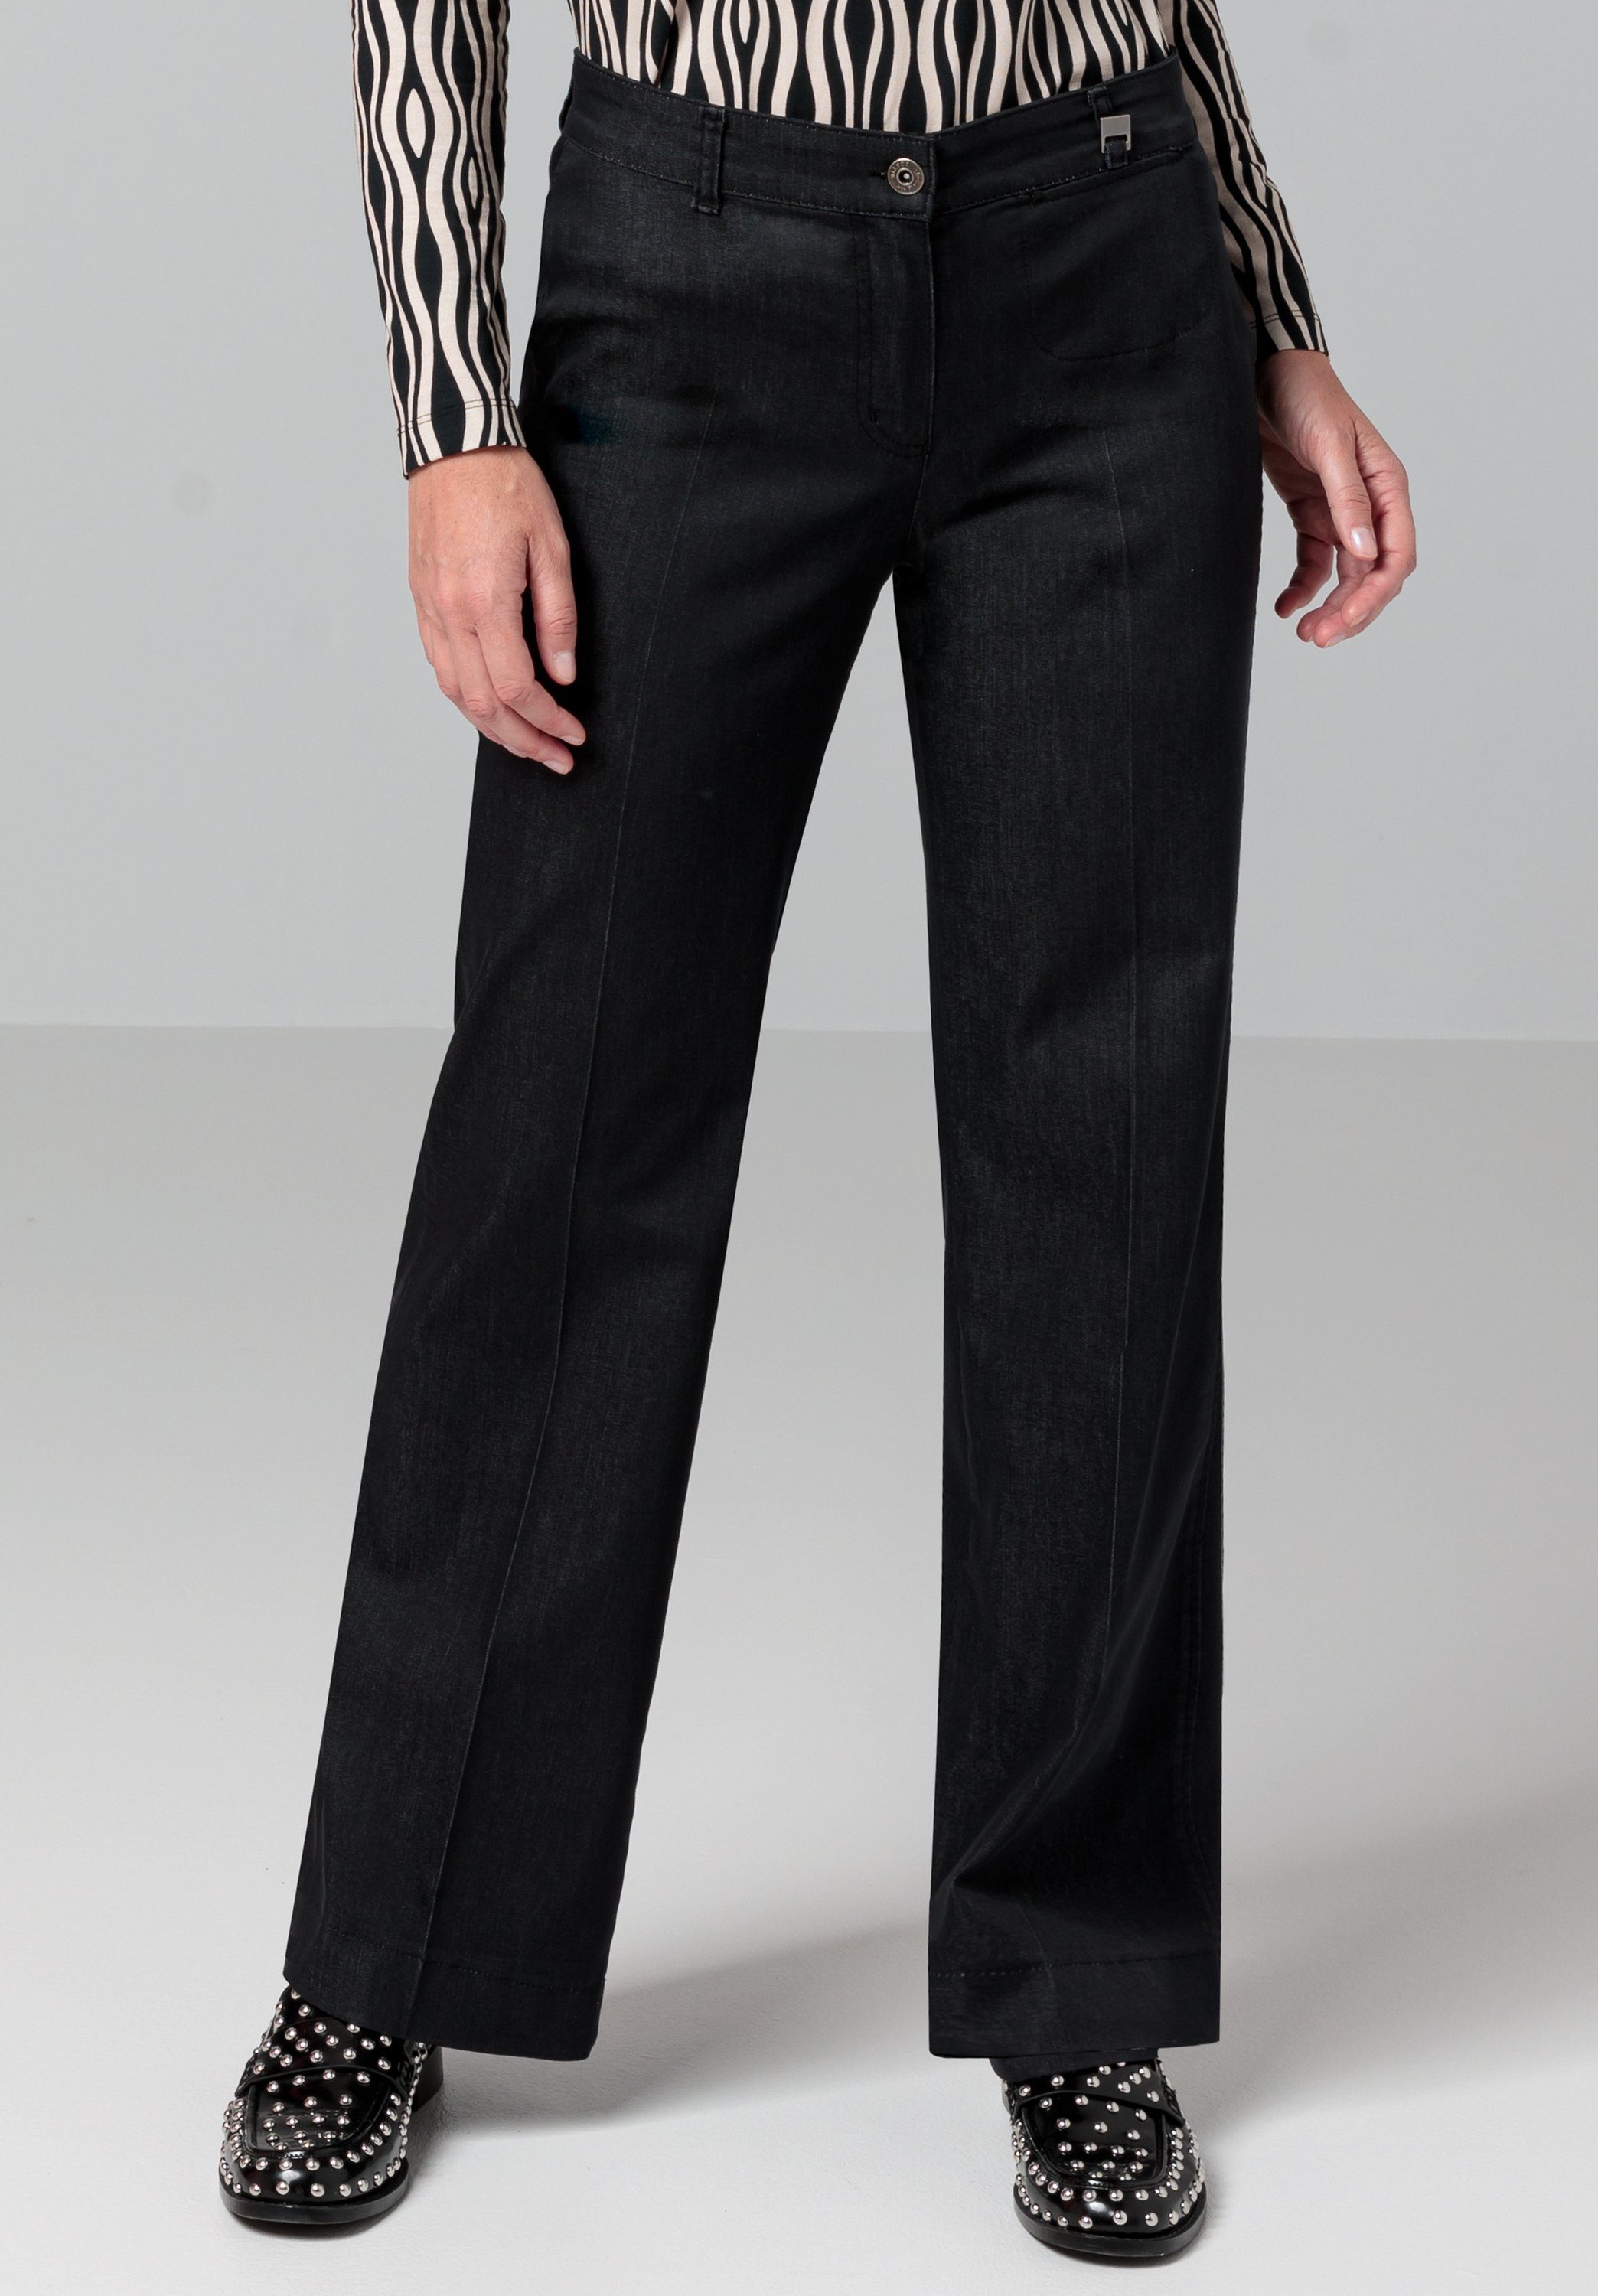 super aus black Denim bianca Stretch-Jeans elastischem MELBOURNE